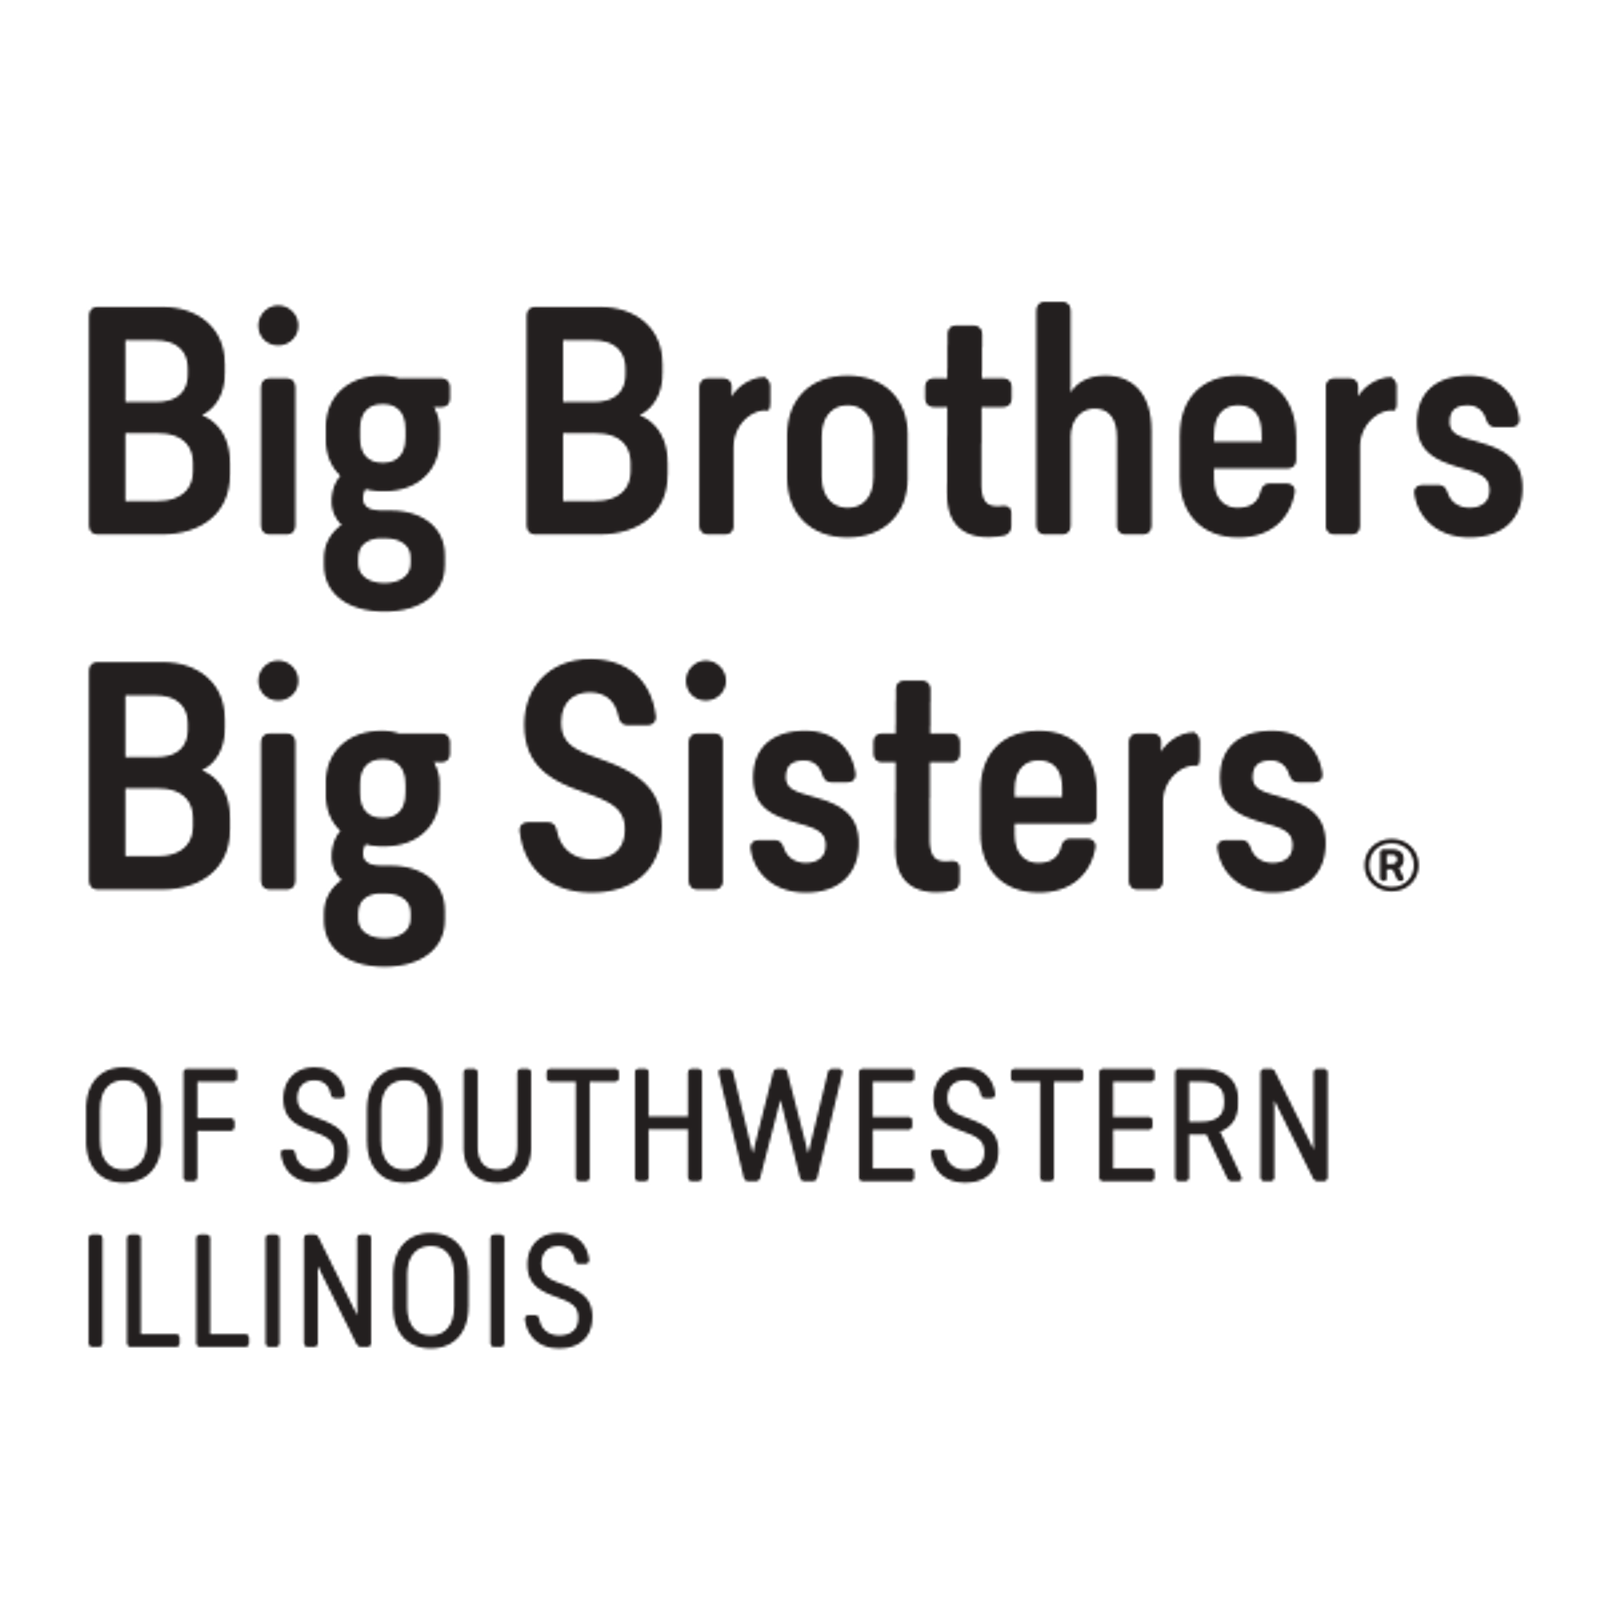 Big Brothers Big sisters Southwestern Illinois